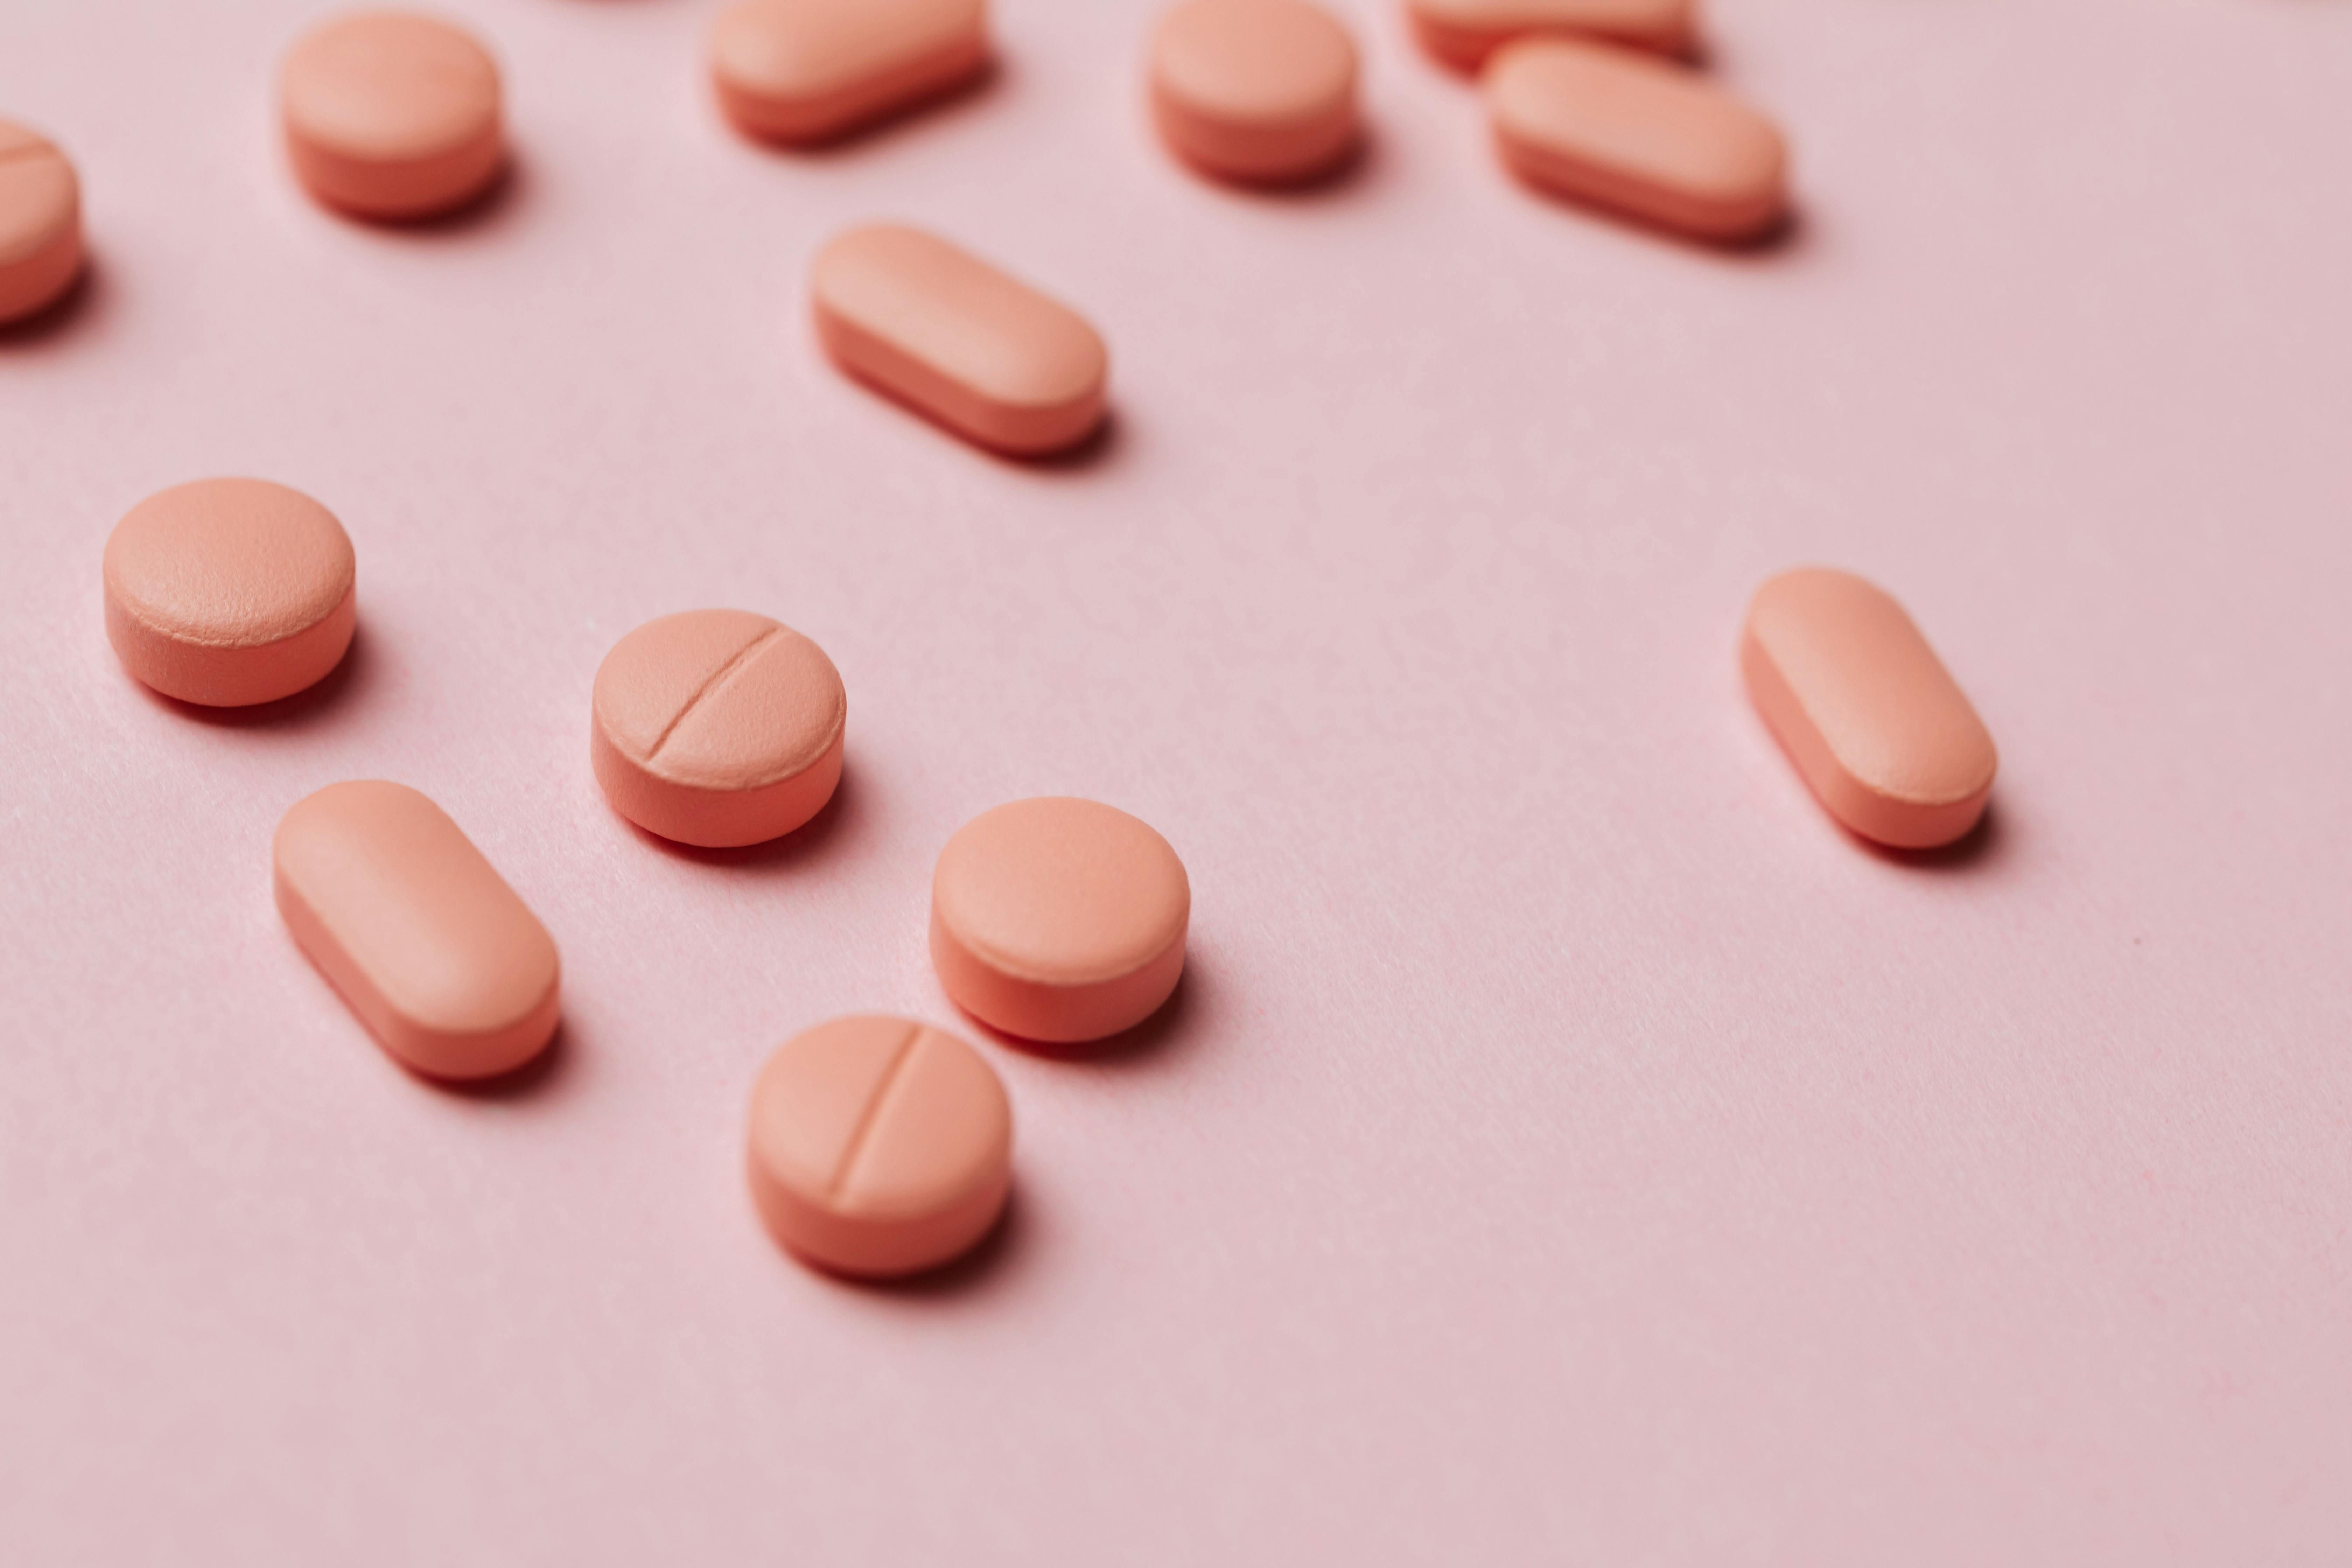 Melatonin pills on a table, highlighting women's sleep aid options